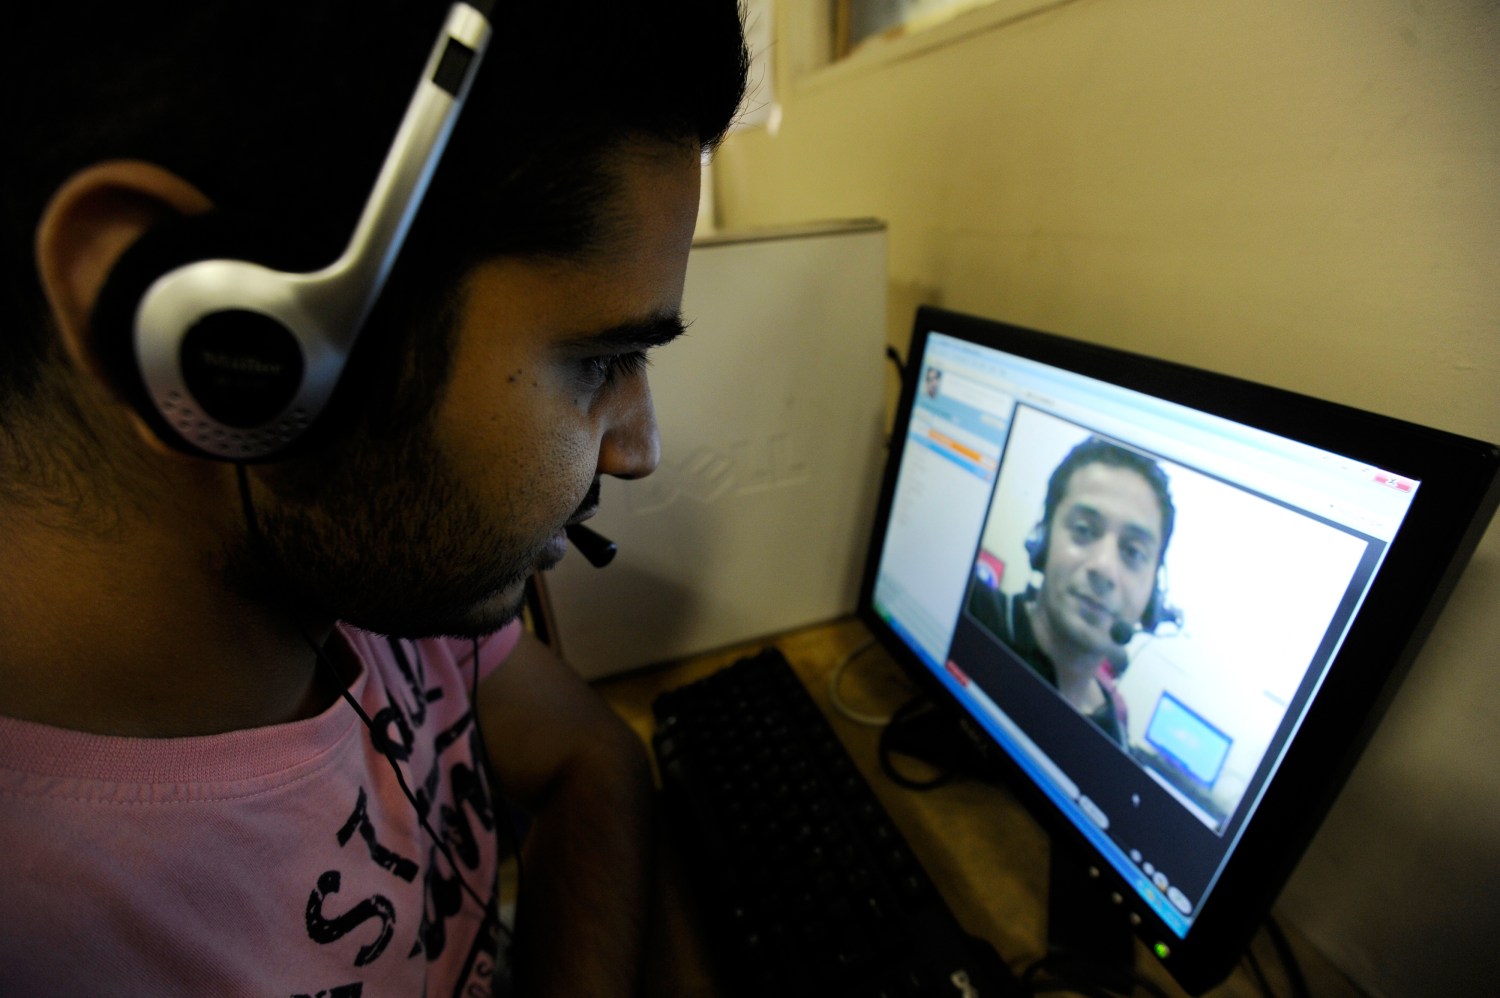 Zubair Ghumro (L) speaks to his friend Sheeraz Qazalbash using Skype